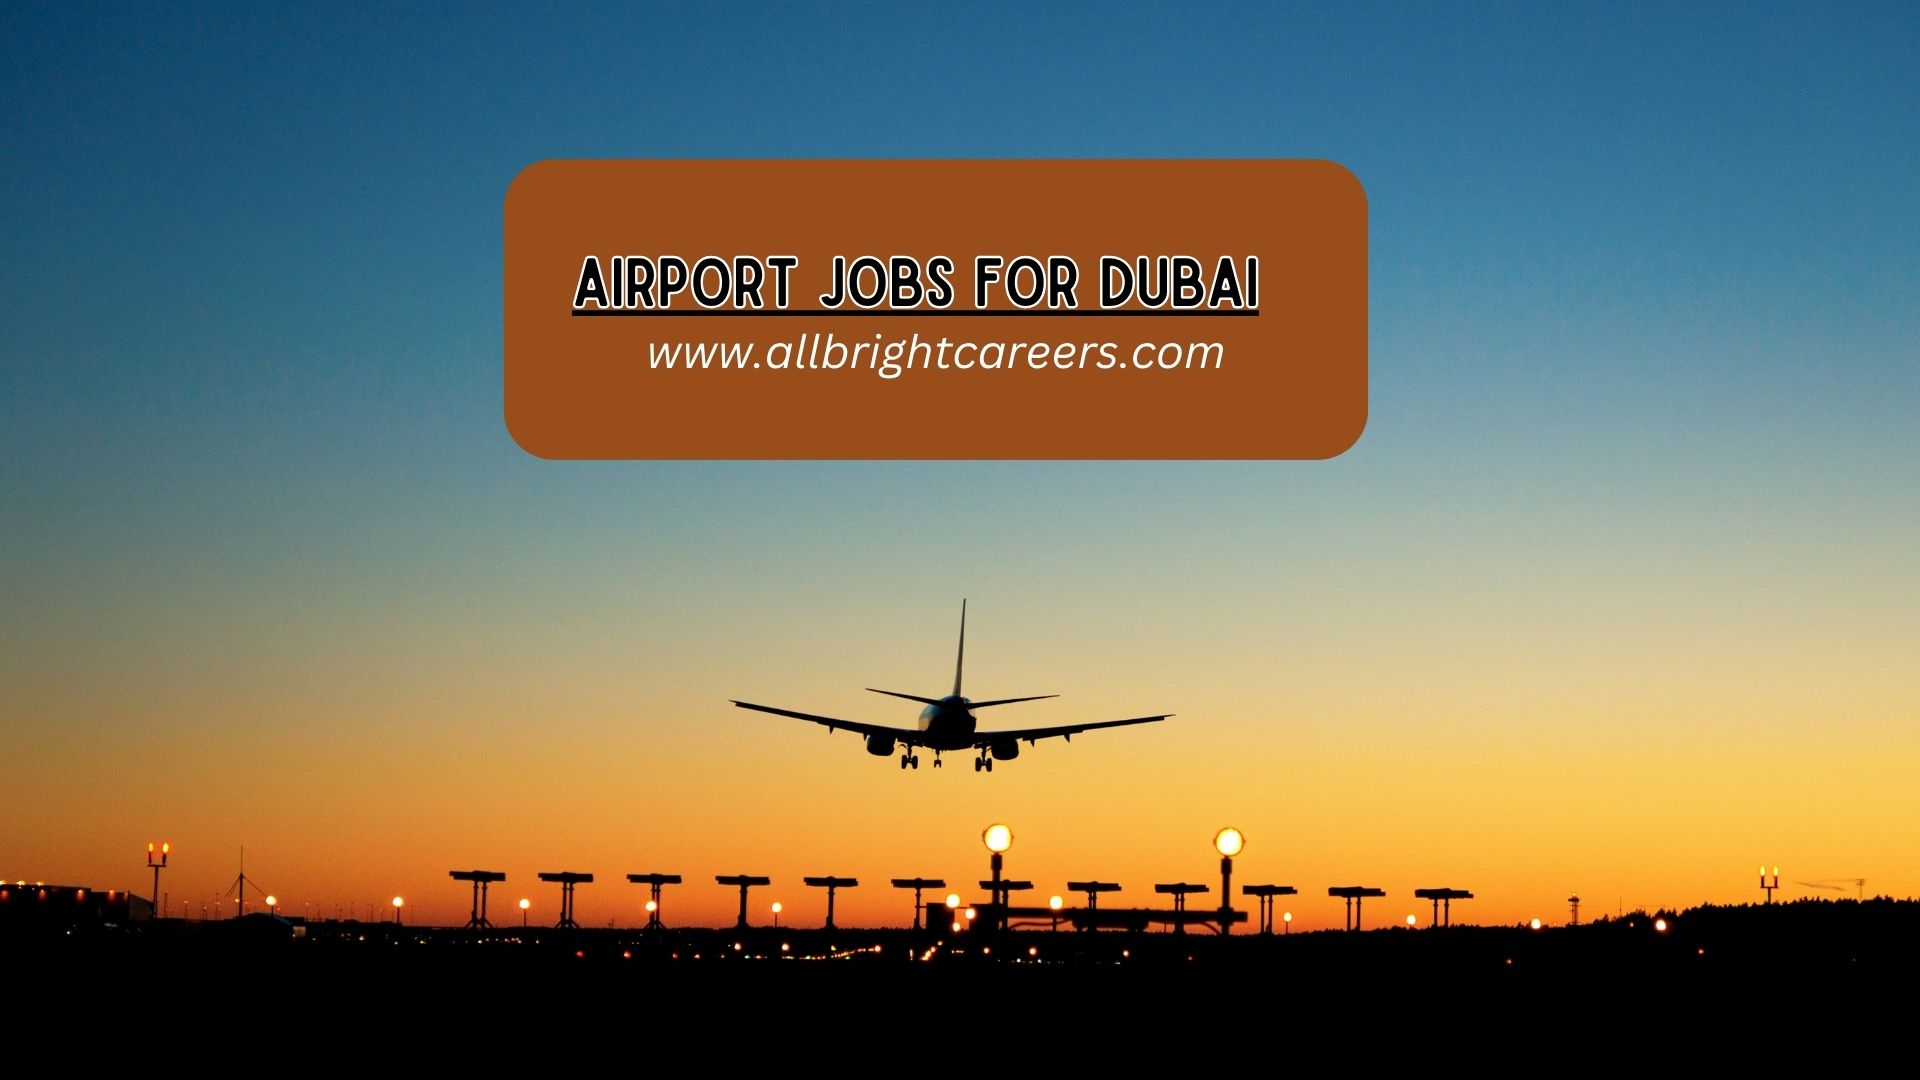 Airport jobs for Dubai